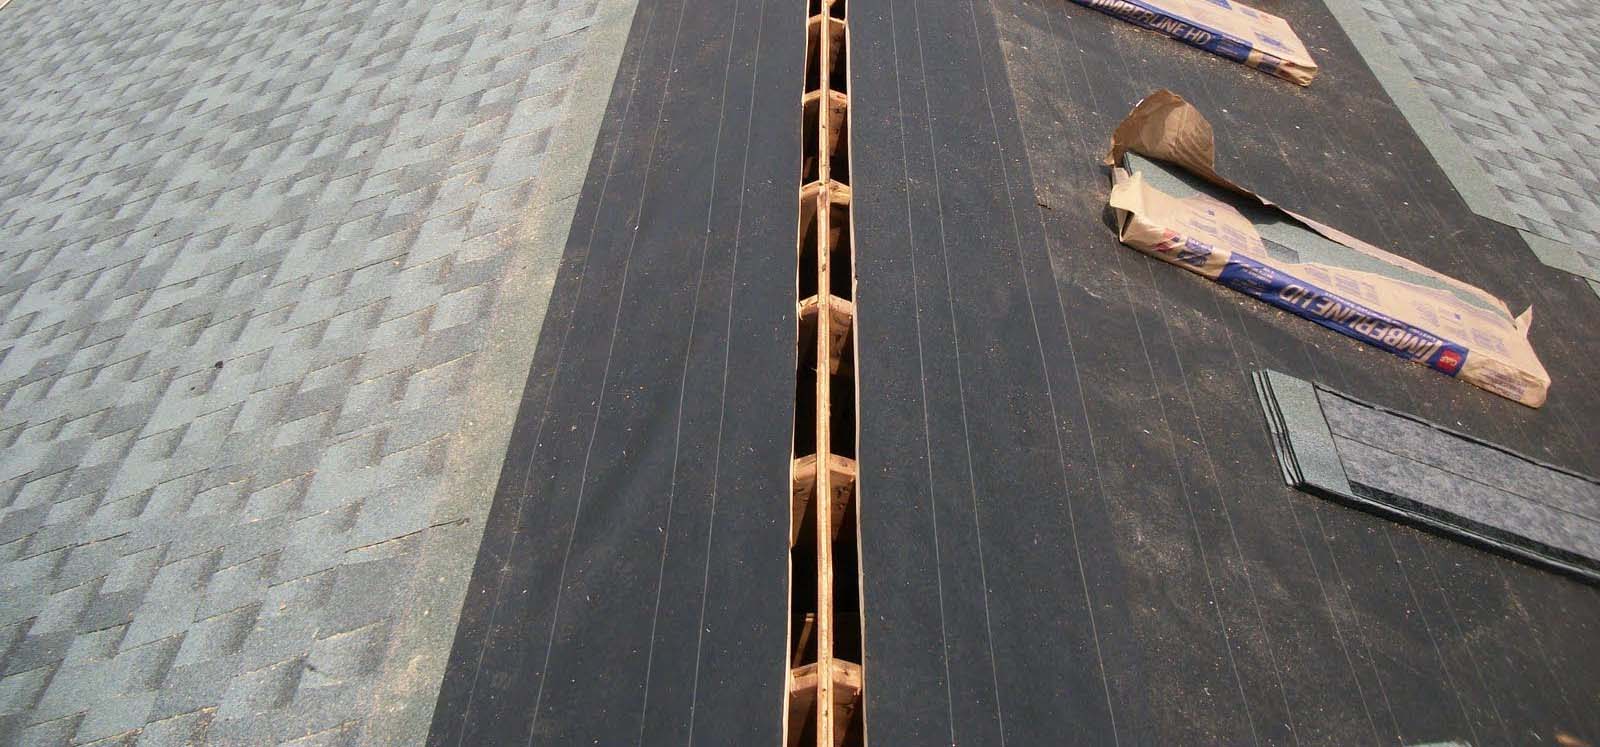 ridge vent gap on a roof